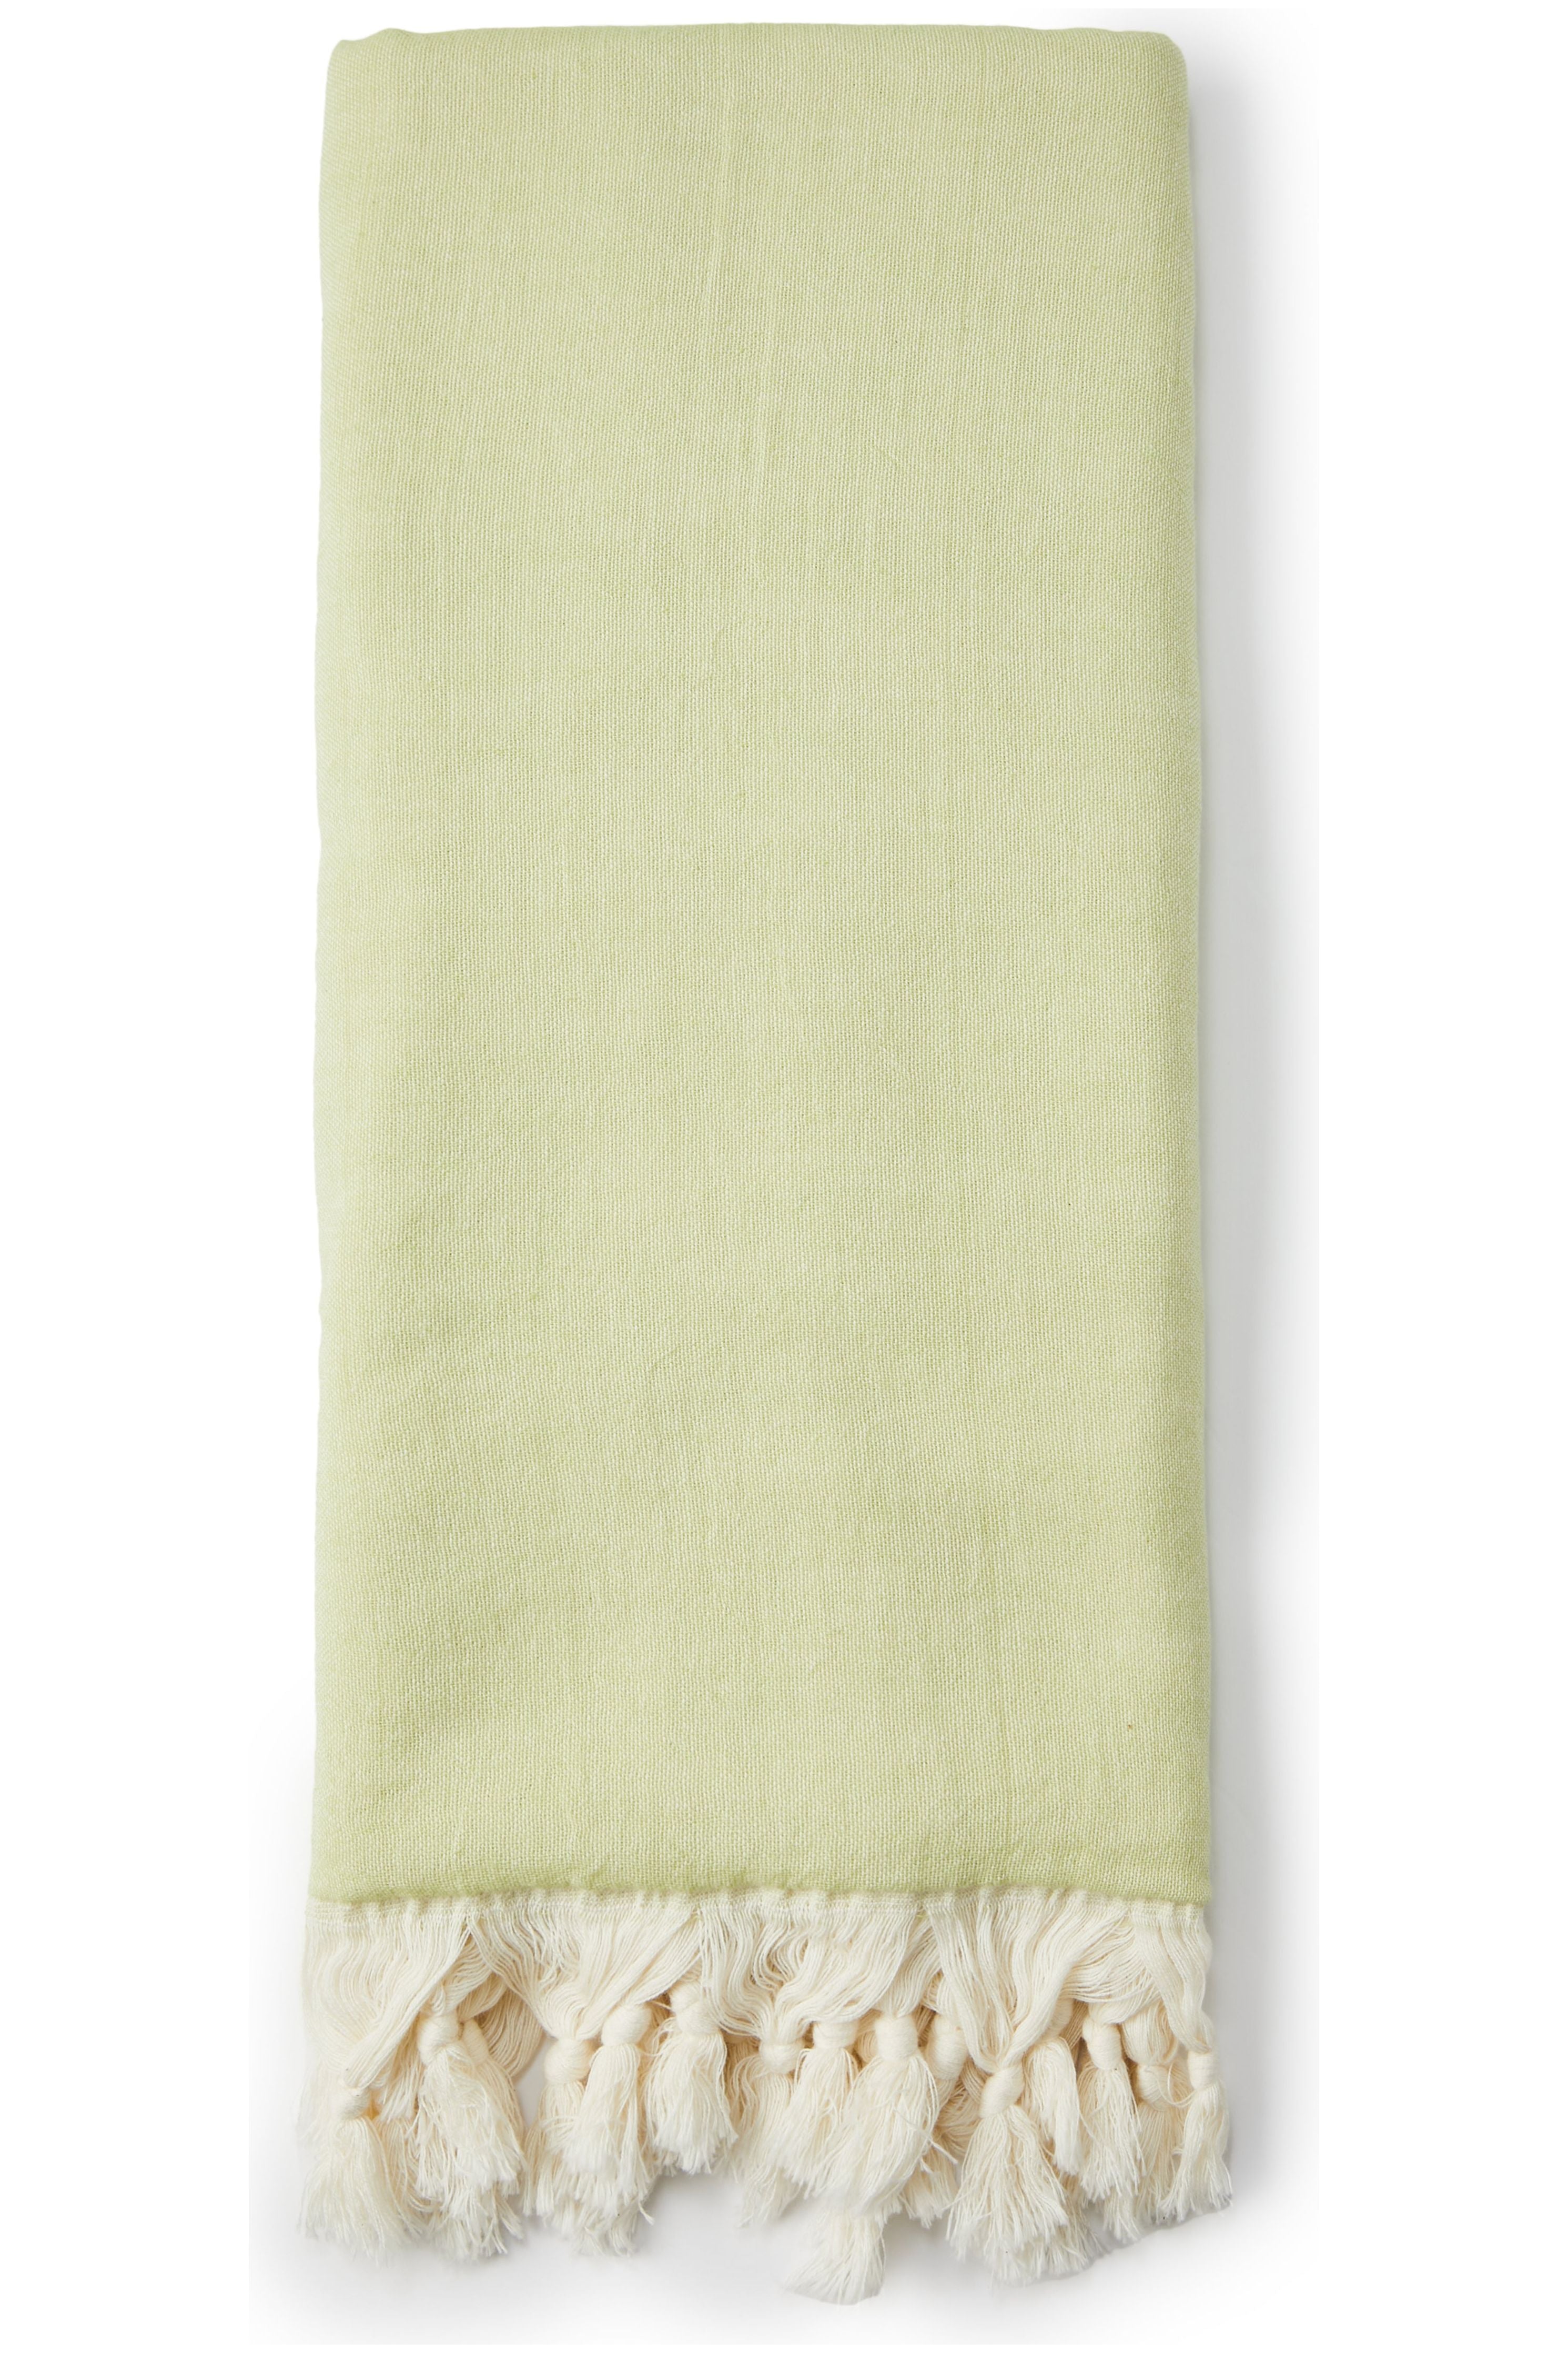 Turkish Towel Palm Tree - Pistachio Green